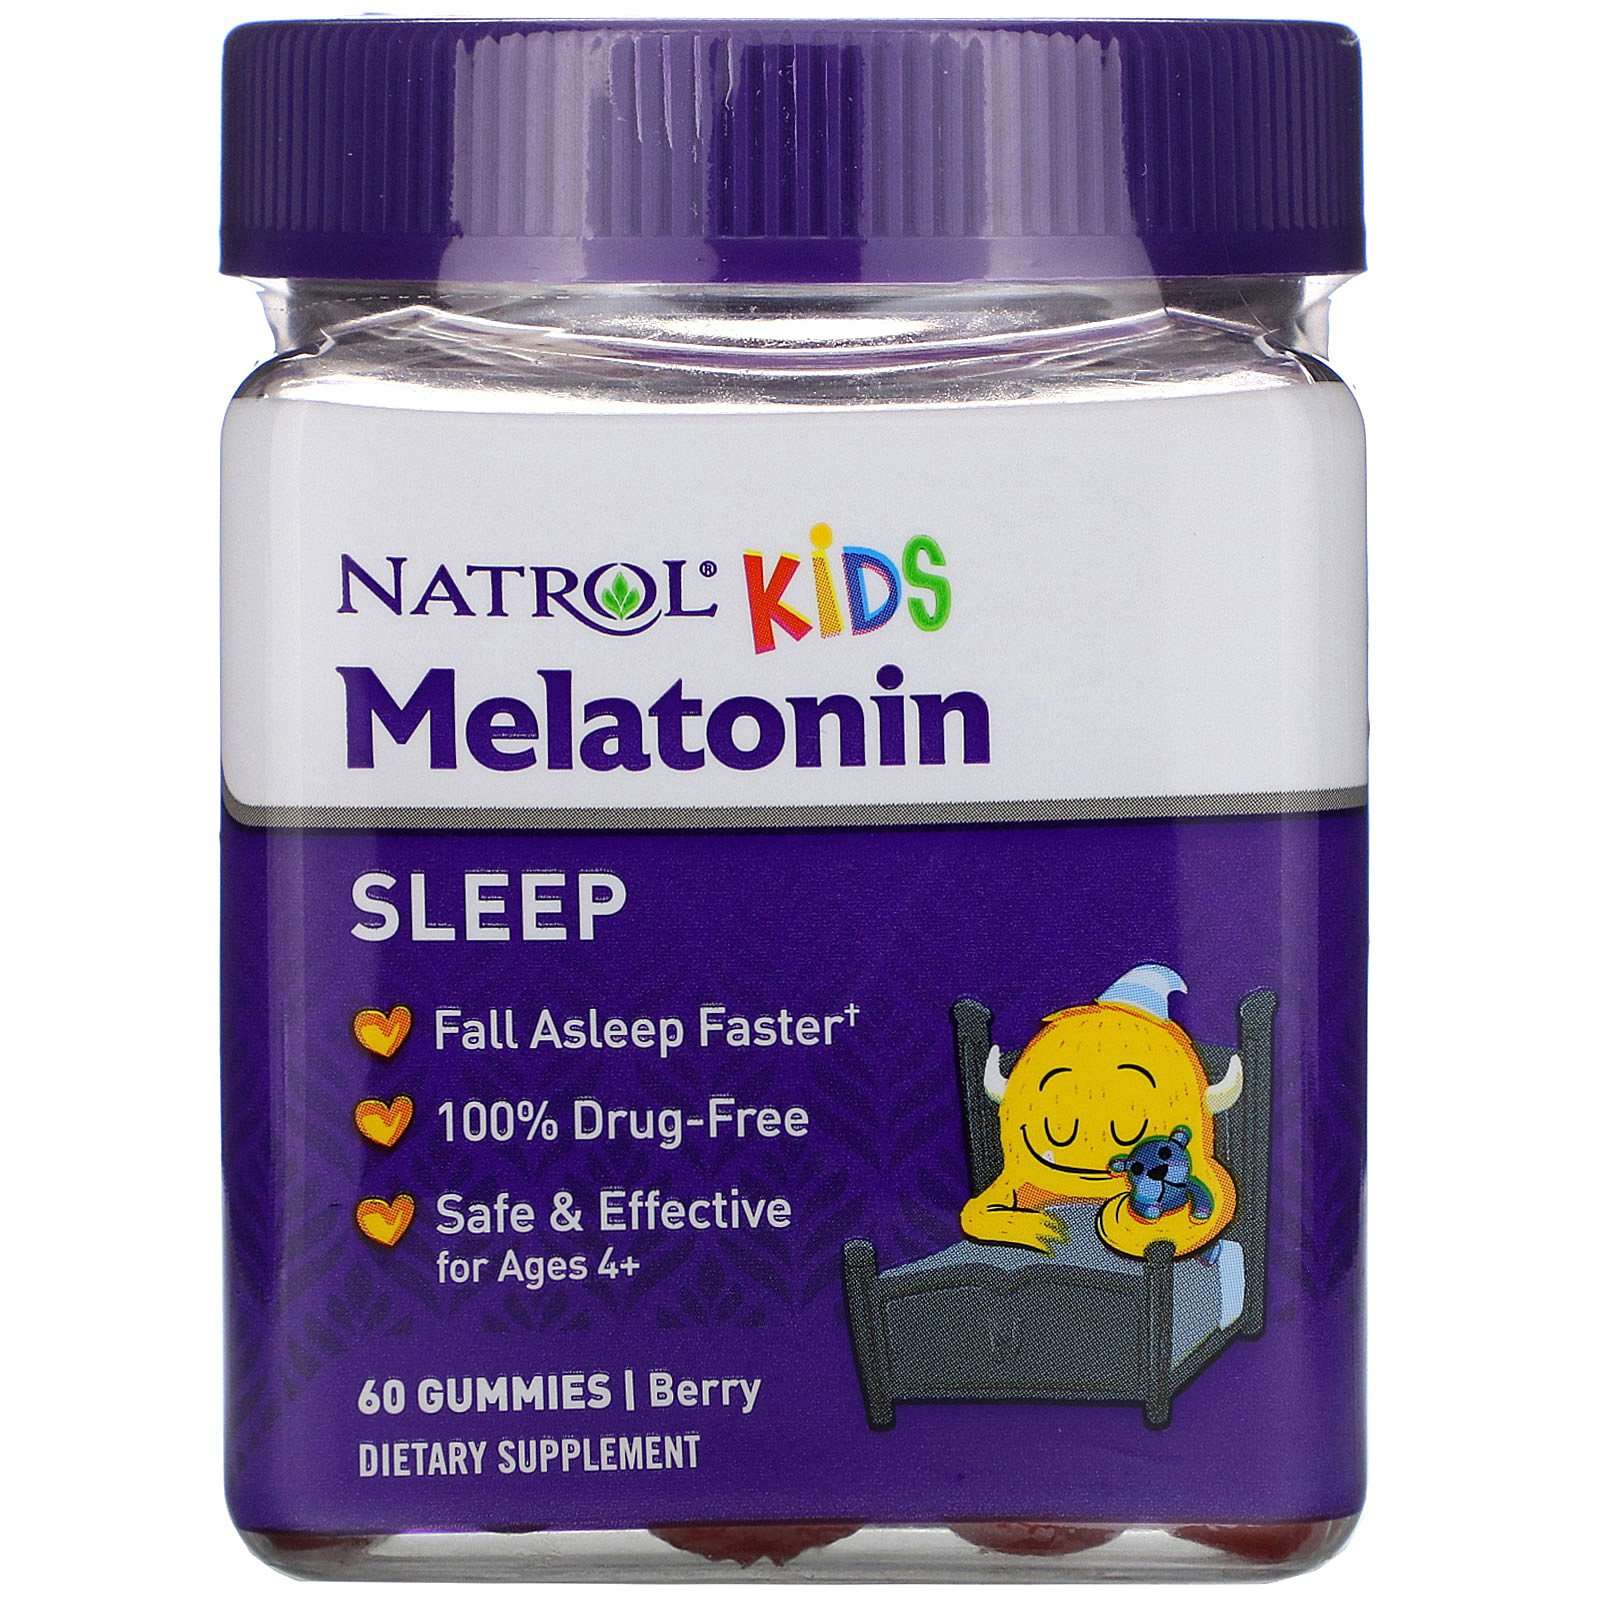 NATROL KIDS MELATONIN SLEEP 1MG 60 GUMMIES